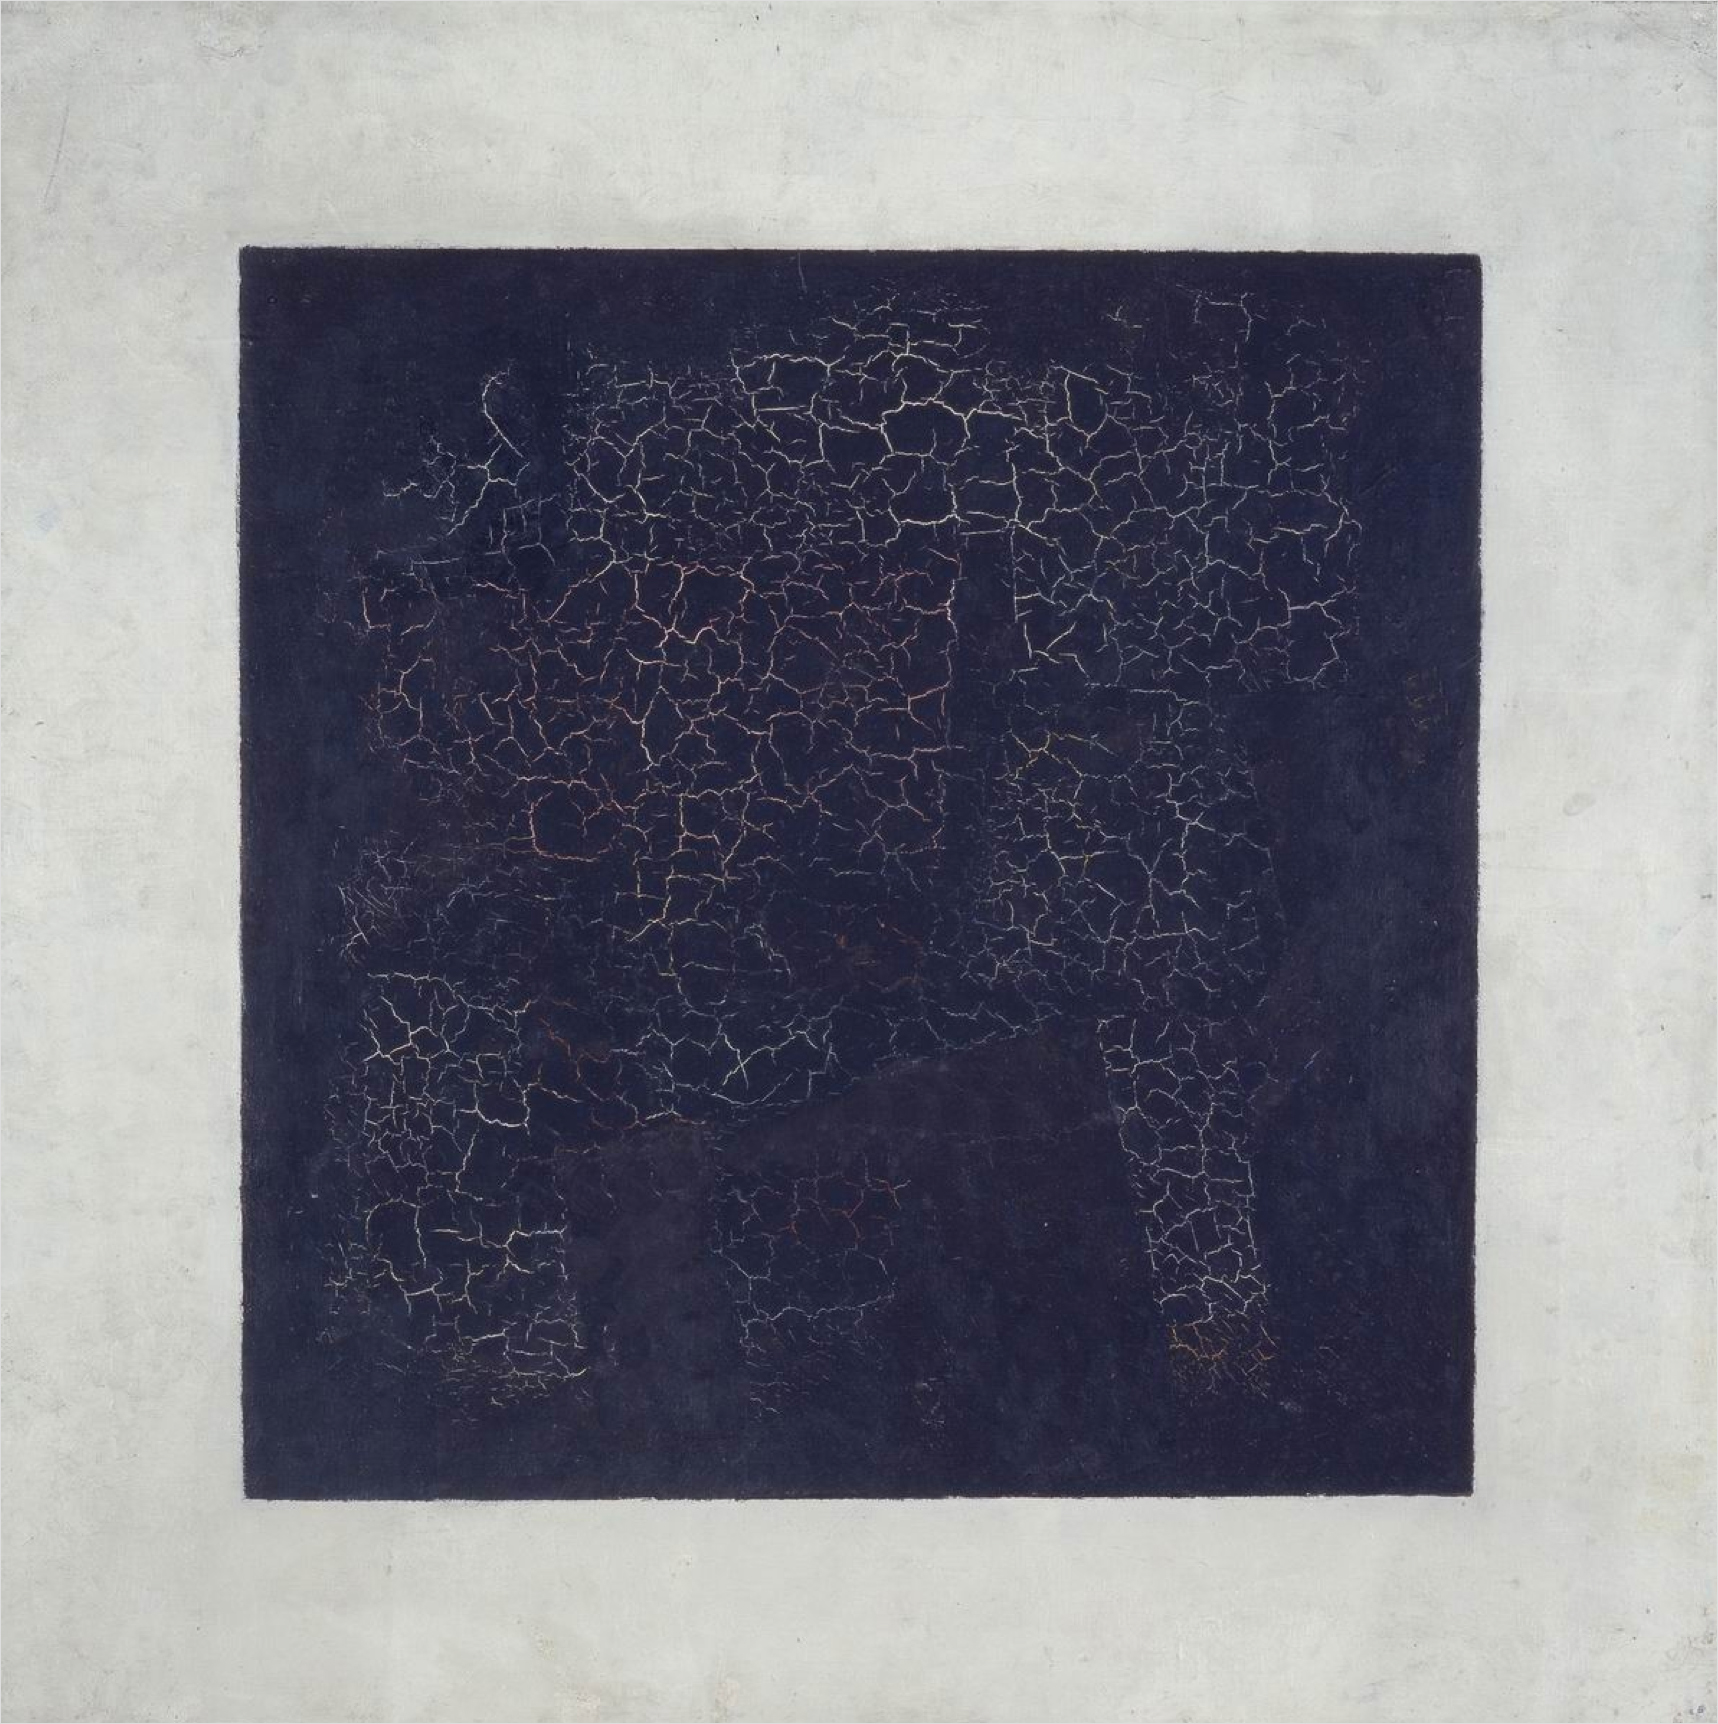 काला वर्ग by Kazimir Malevich - १९१५ - ७९.५ x ७९.५ सेमी 